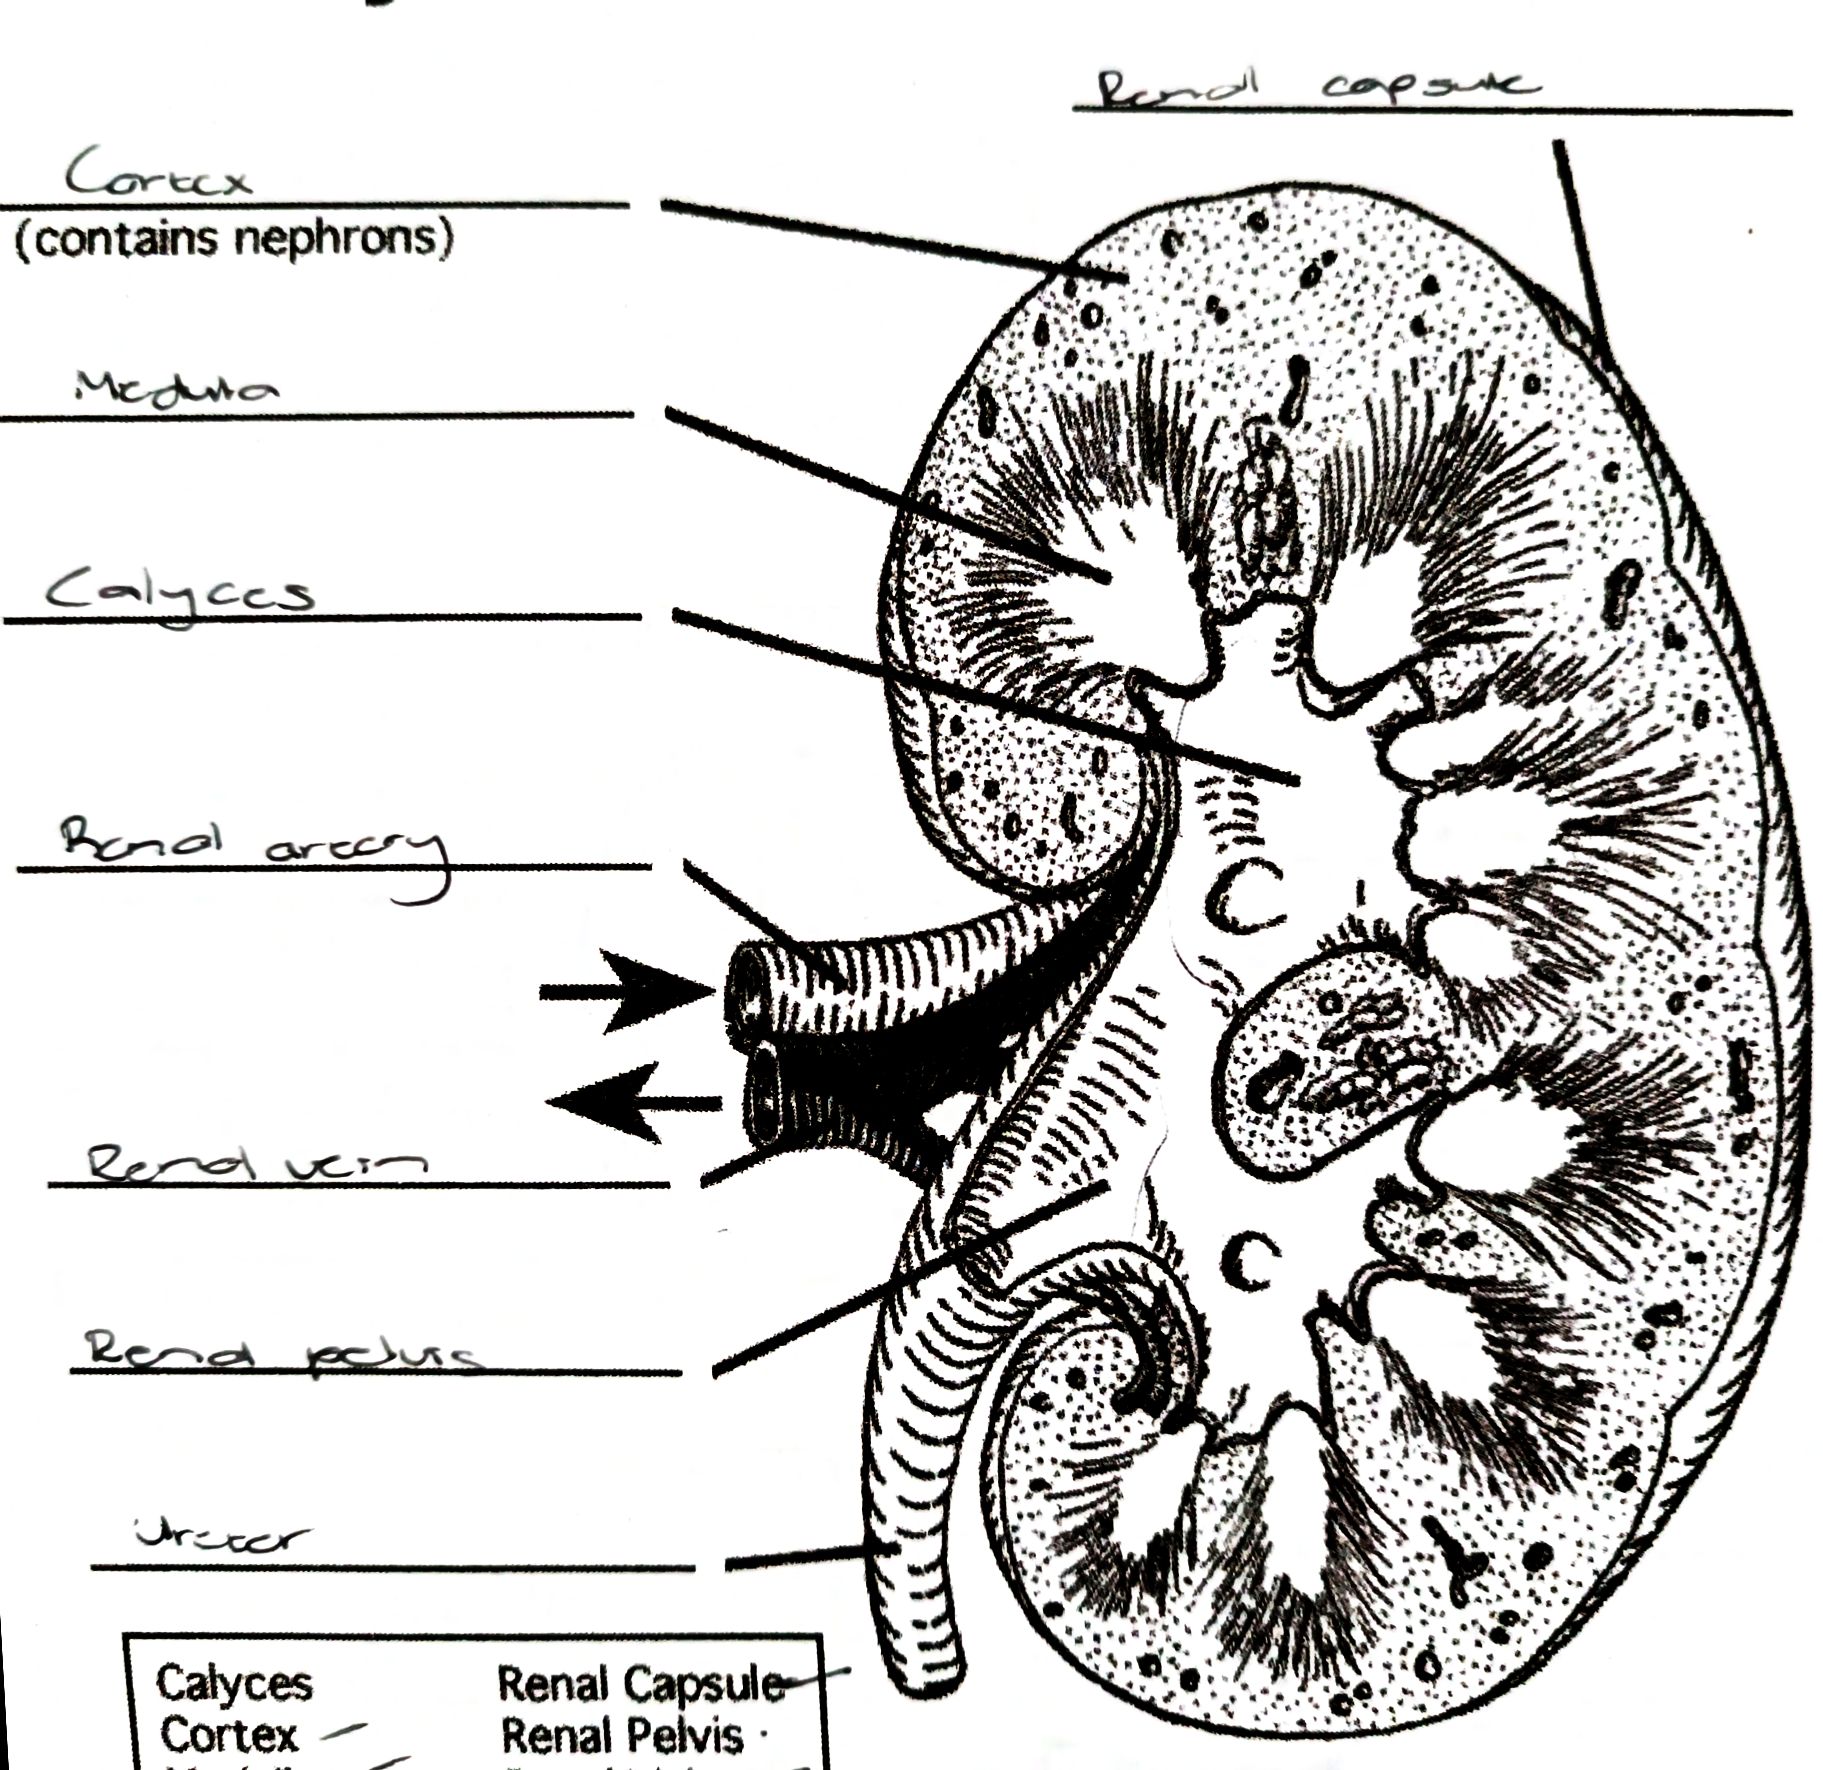 <ul><li><p>acts as excretory organ</p></li><li><p>bean shaped</p></li><li><p>fit in between the rib cage and the pelvis, at the back of the body</p></li><li><p>protected against heat loss and injury by masses of fatty tissue</p></li></ul>